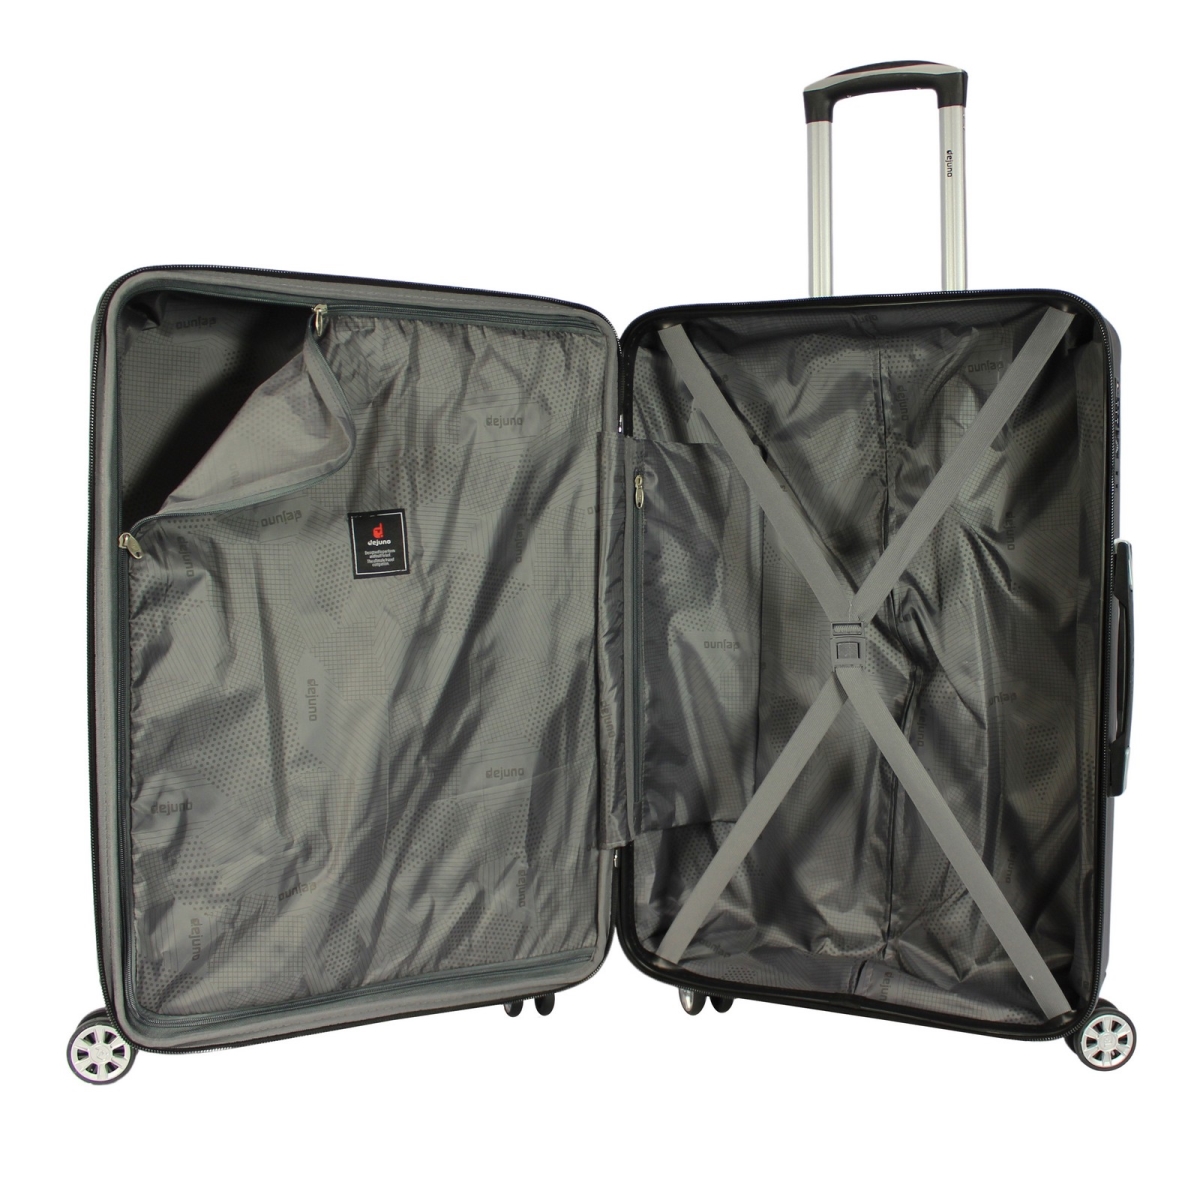 Picture of Dejuno 252015DJ-TURQUOISE Tutin Hardside Spinner Luggage Set with TSA Lock, Turquoise - 3 Piece